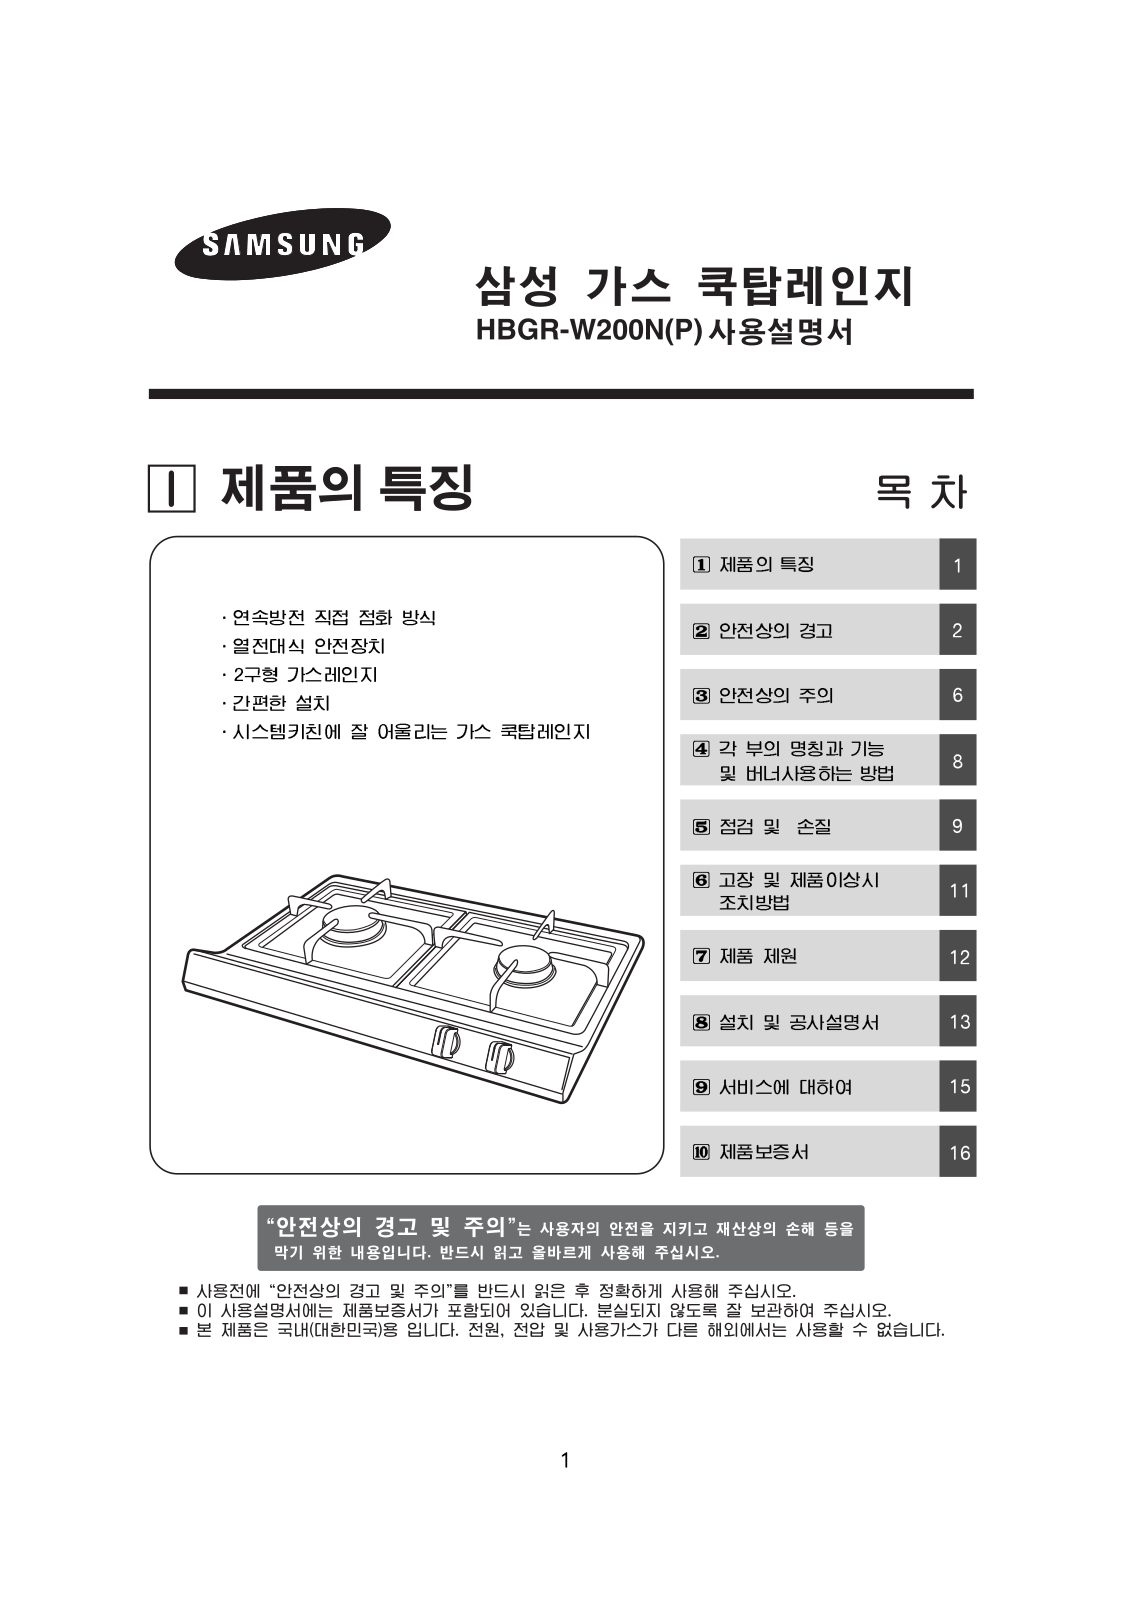 Samsung HBGR-W200N User Manual